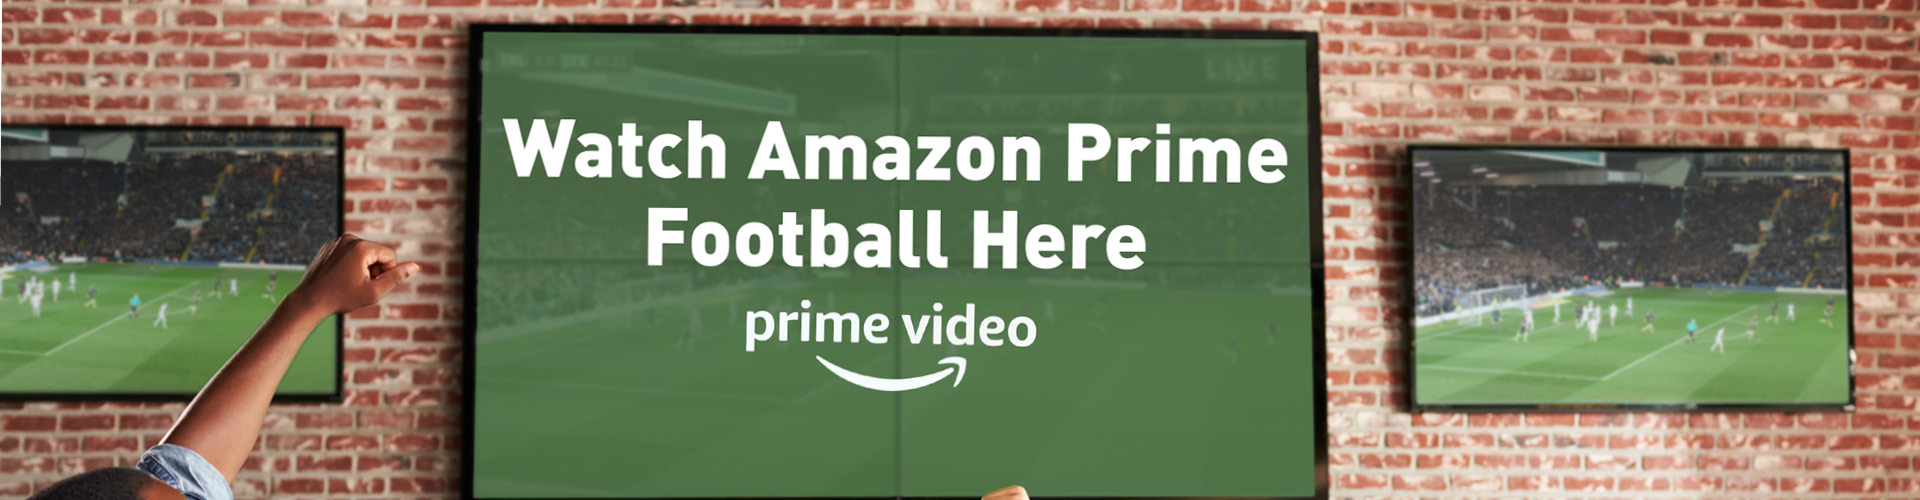 Watch Amazon Prime Football Here - Prime Video